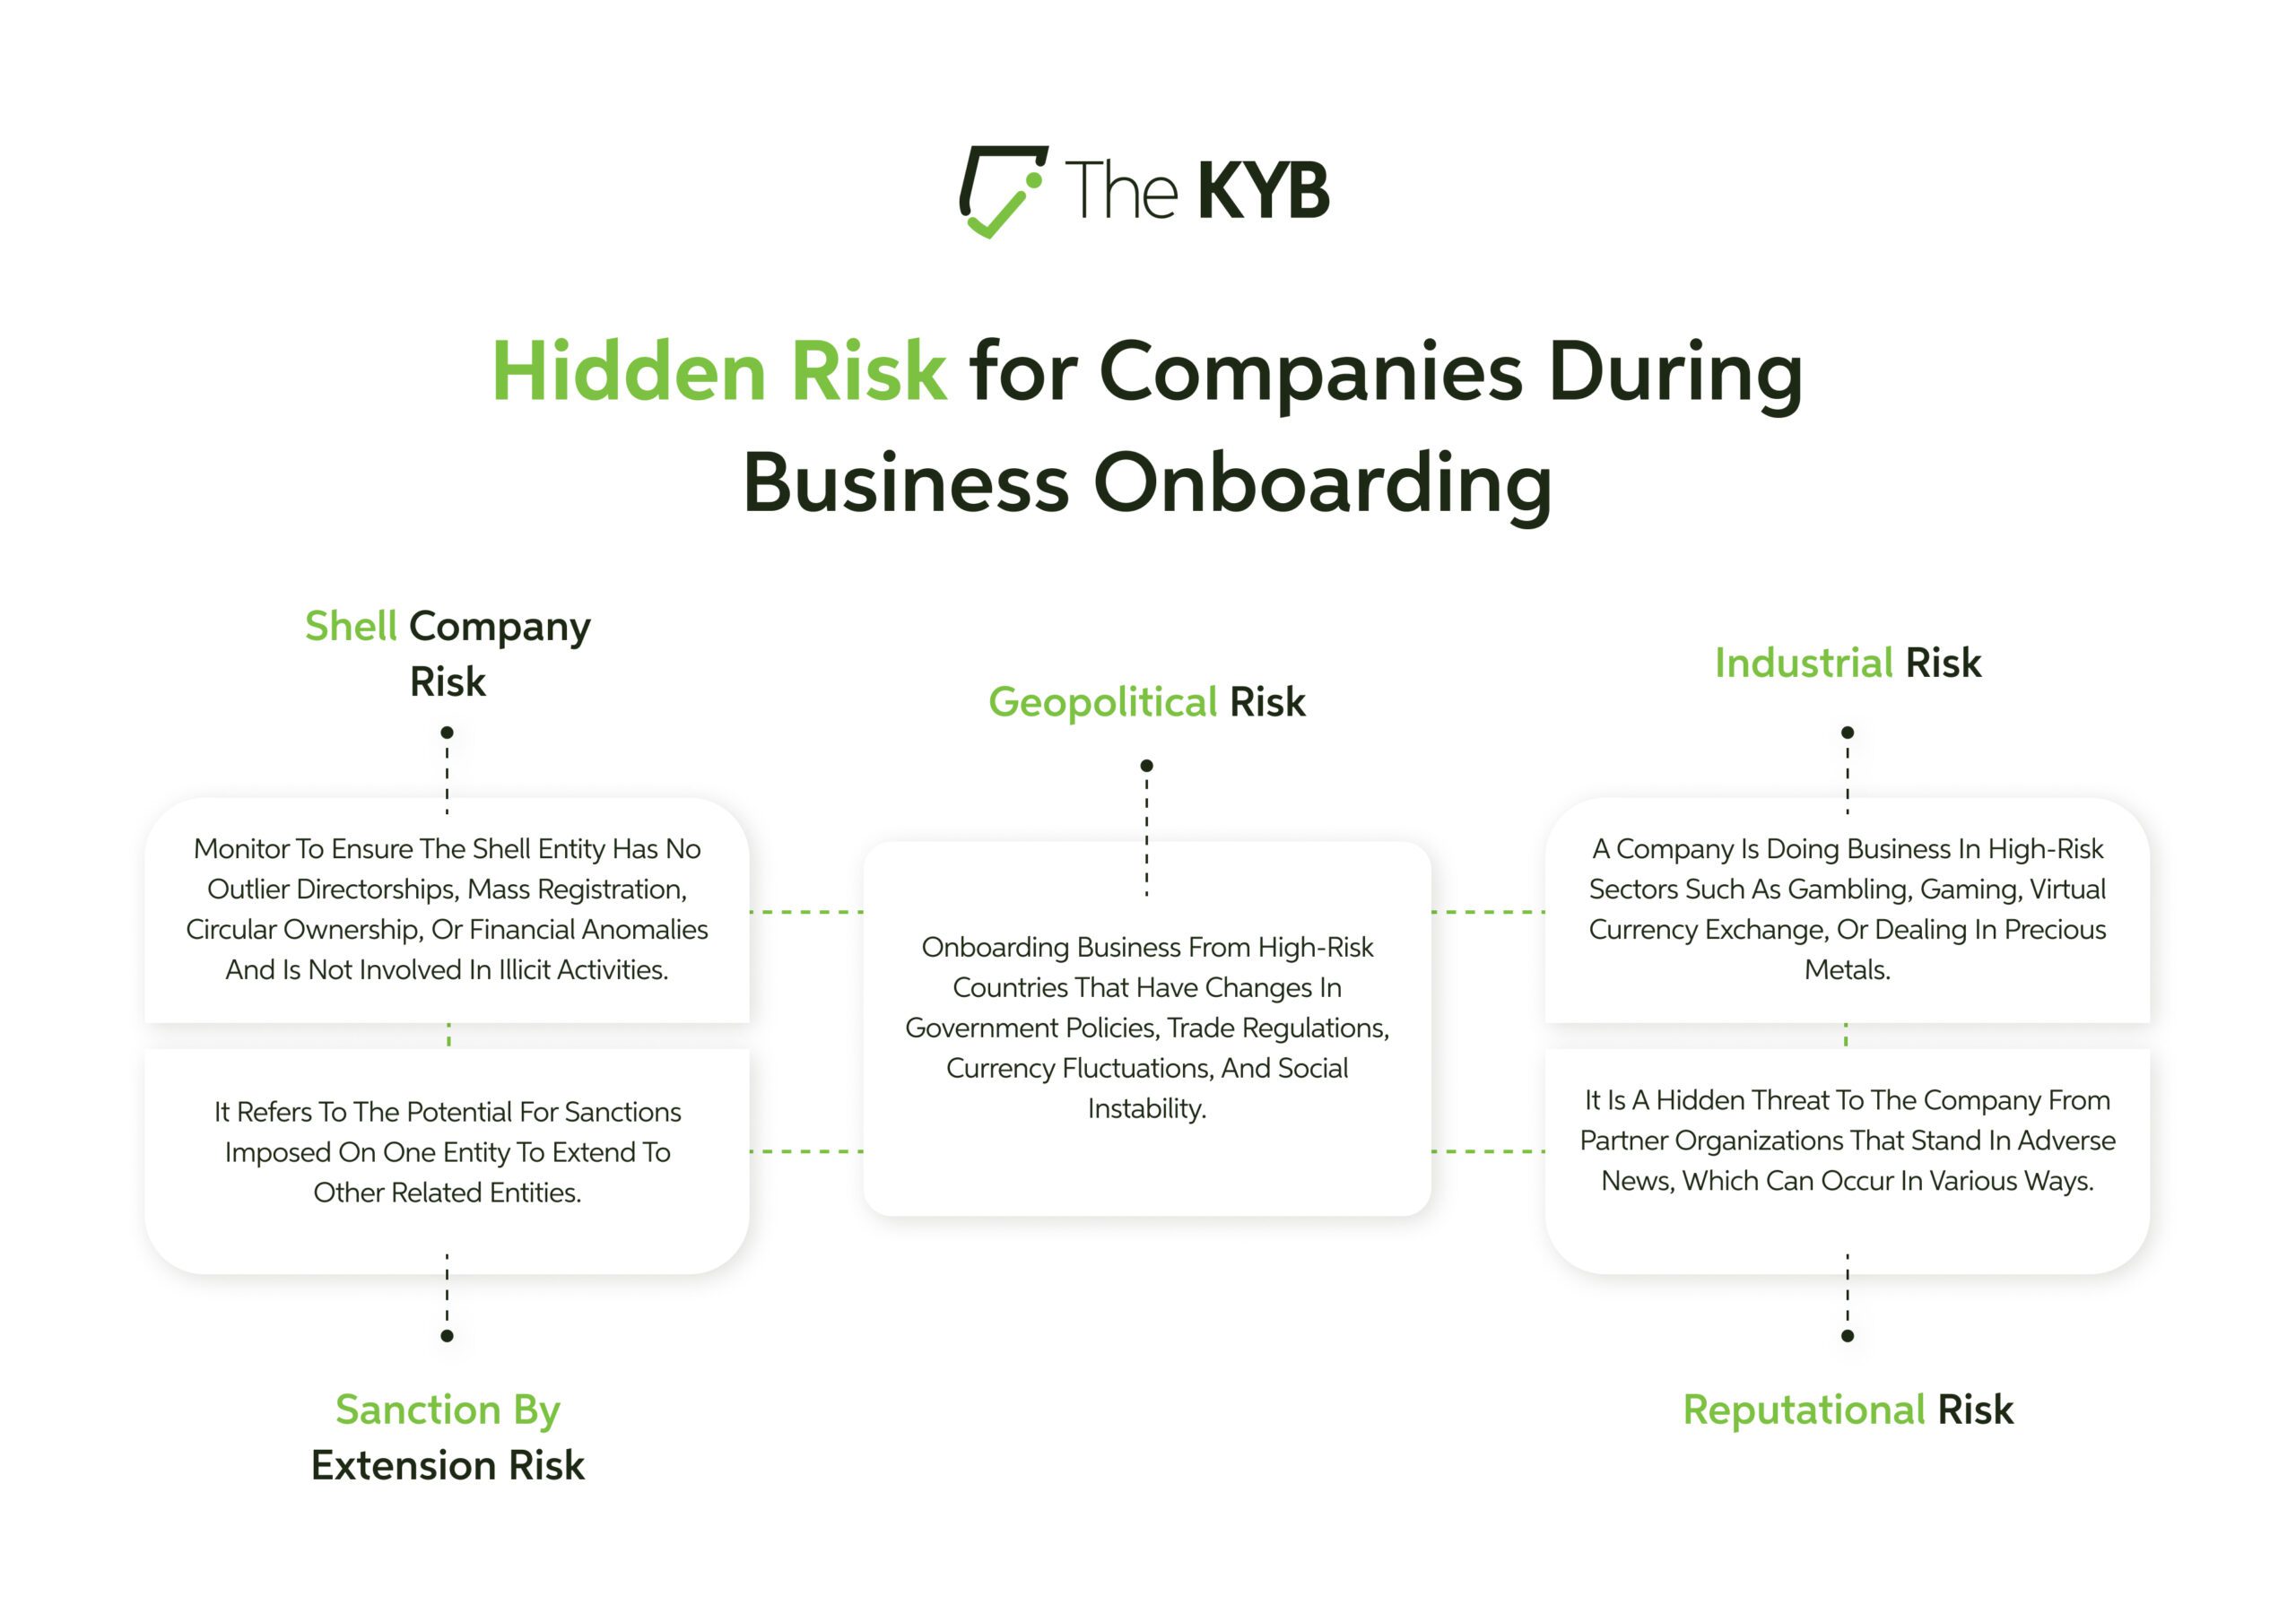 Hidden risks during business onboarding